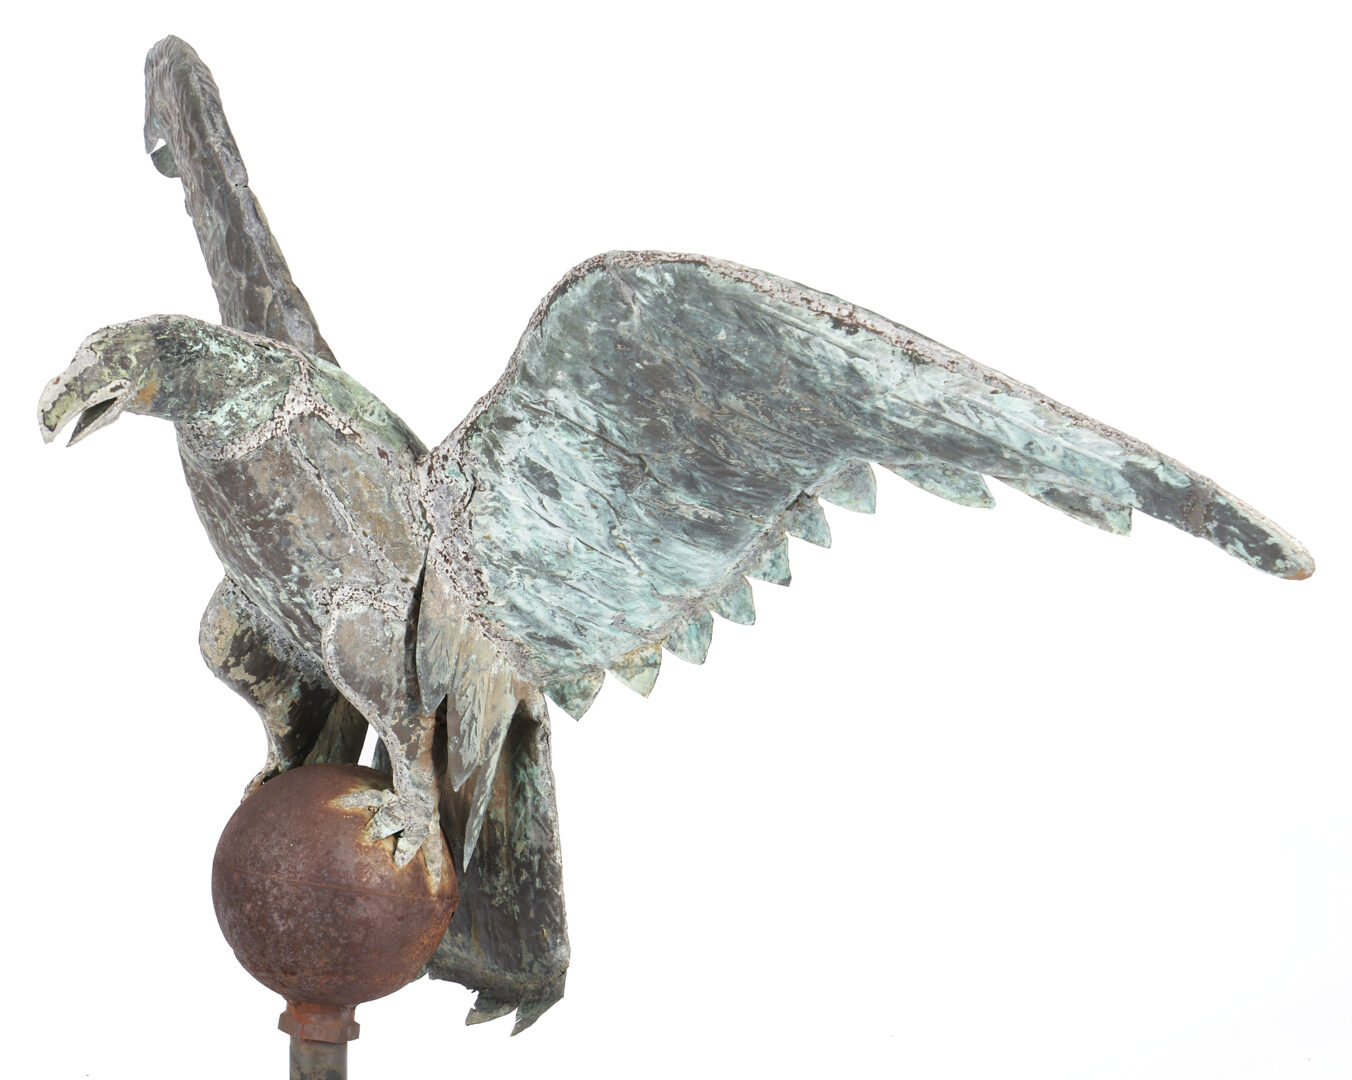 Lot 174: Large Copper Eagle on Sphere, Weathervane or Flag Pole Topper